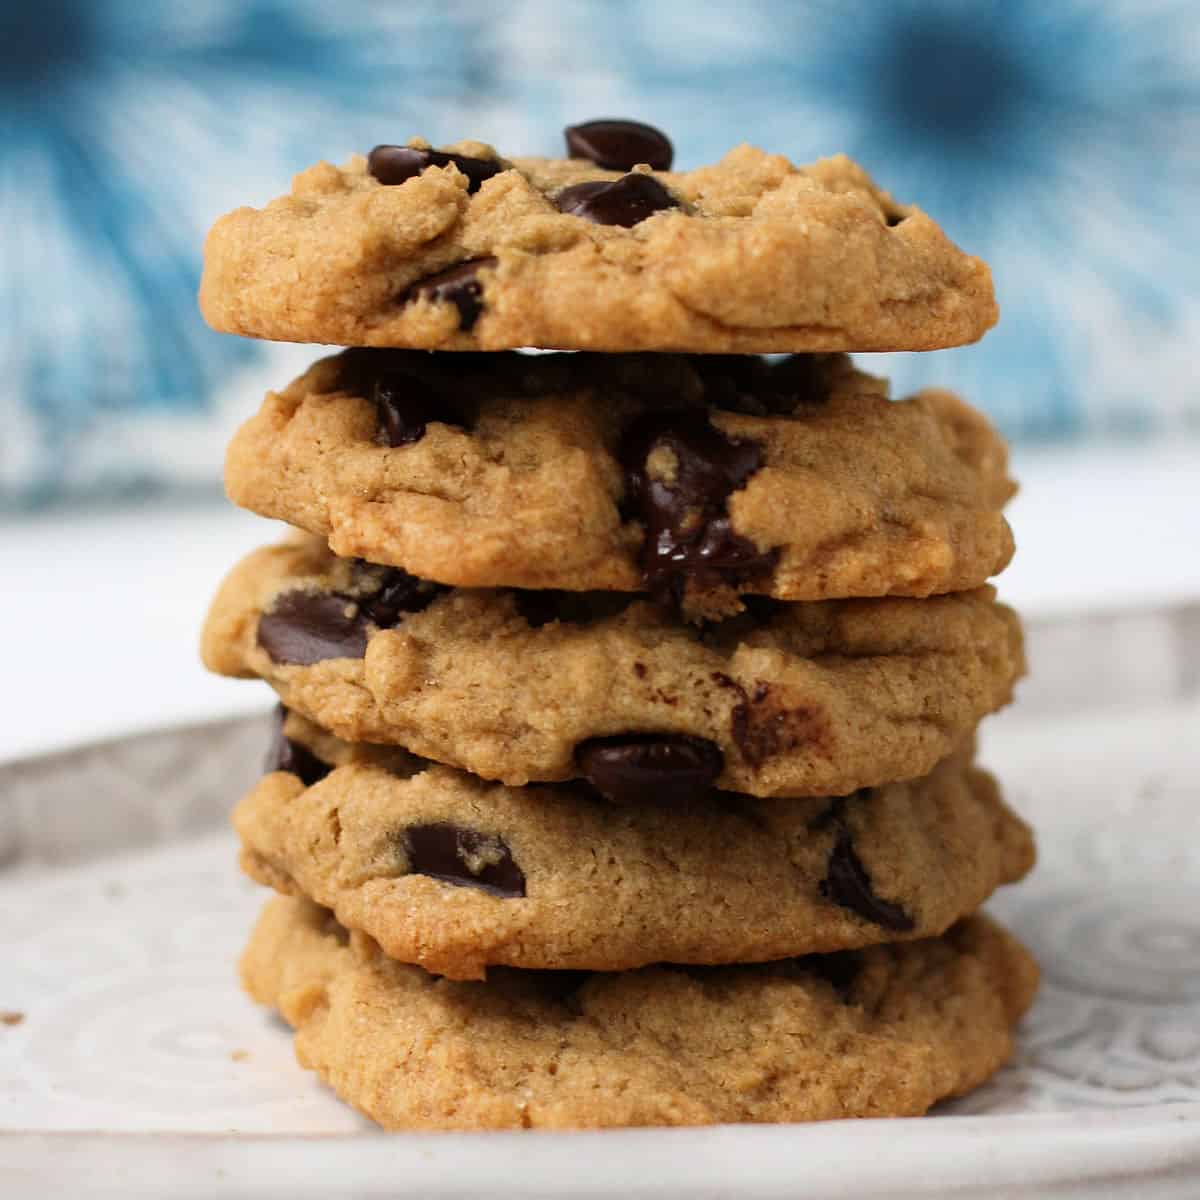 https://theprettybee.com/wp-content/uploads/2022/02/gluten-free-vegan-chocolate-chip-cookies.jpg